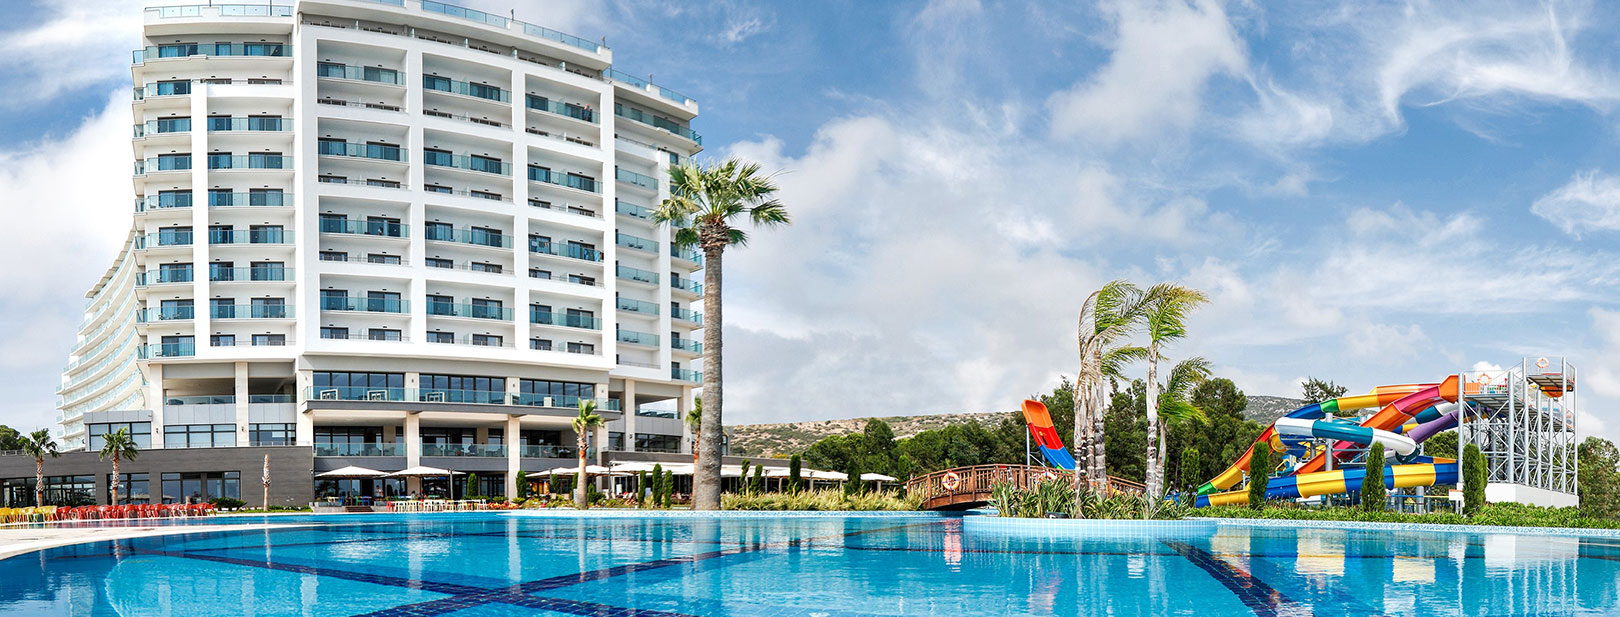 Turquie - Kusadasi - Hôtel Liberty Golf & Resort Kusadasi 5*